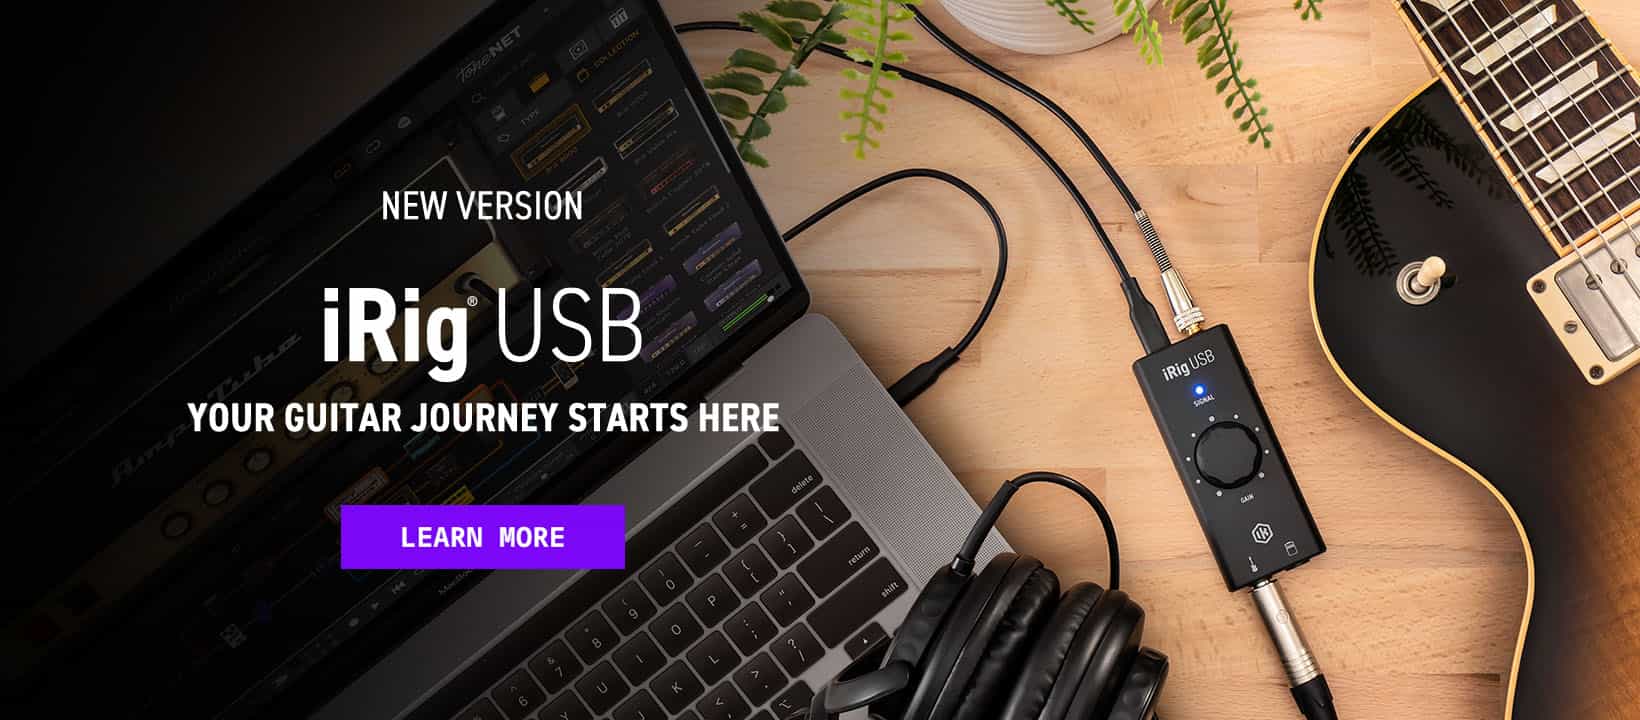 NEW VERSION - iRig USB